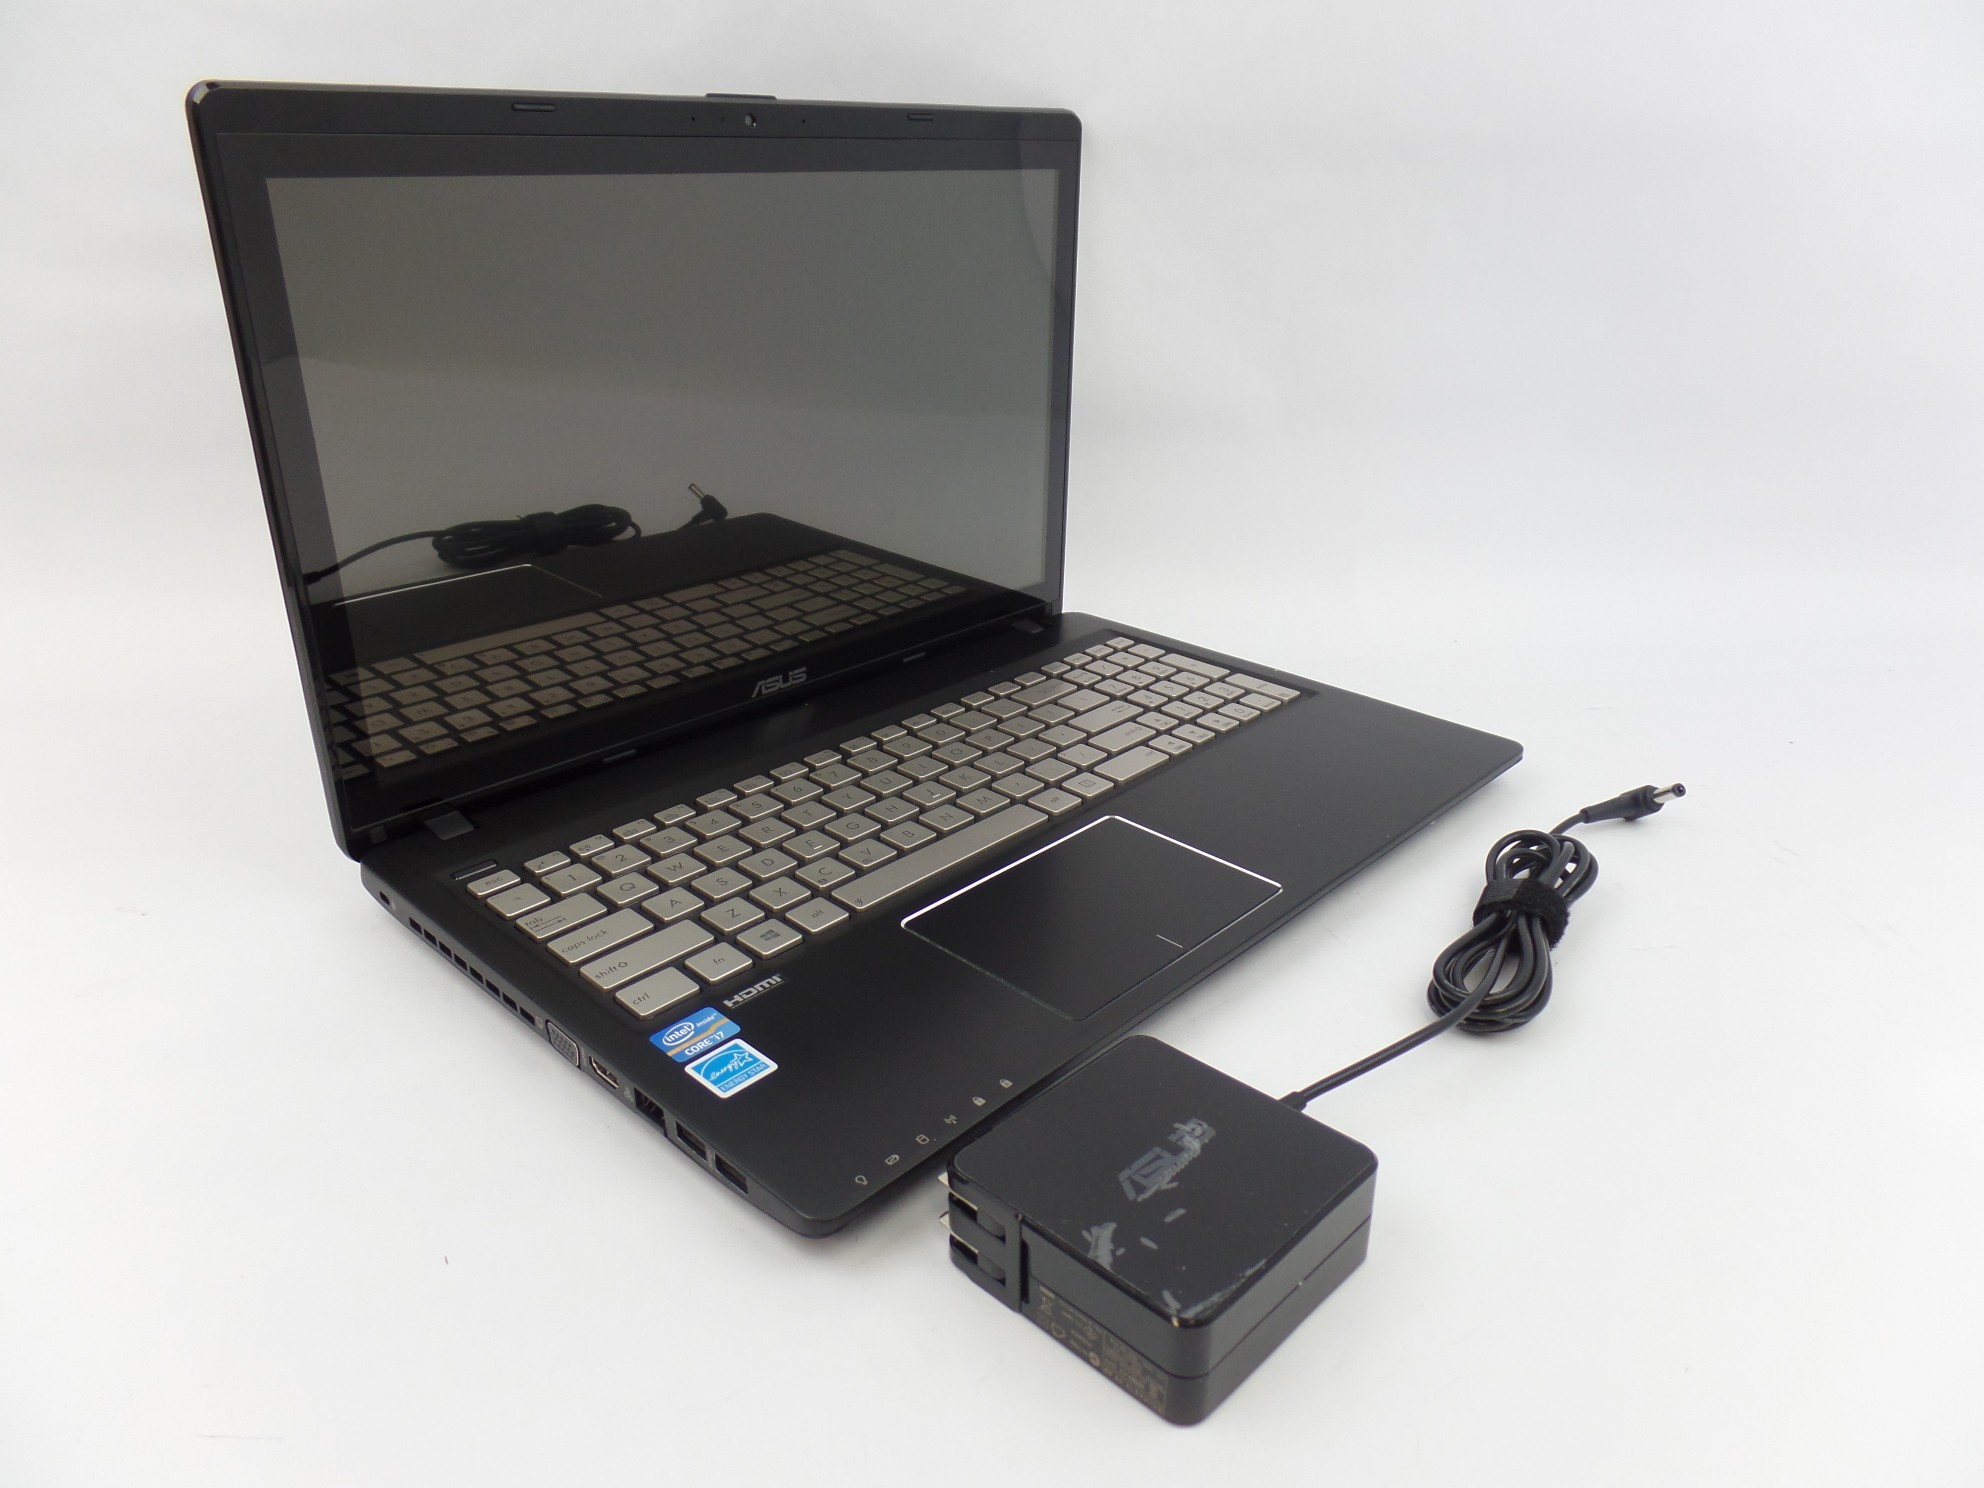 ASUS Q500A-BHI7T05 15.6" FHD Touch i7-3632QM 2.2GHz 8GB 750GB HDD W10H Laptop U